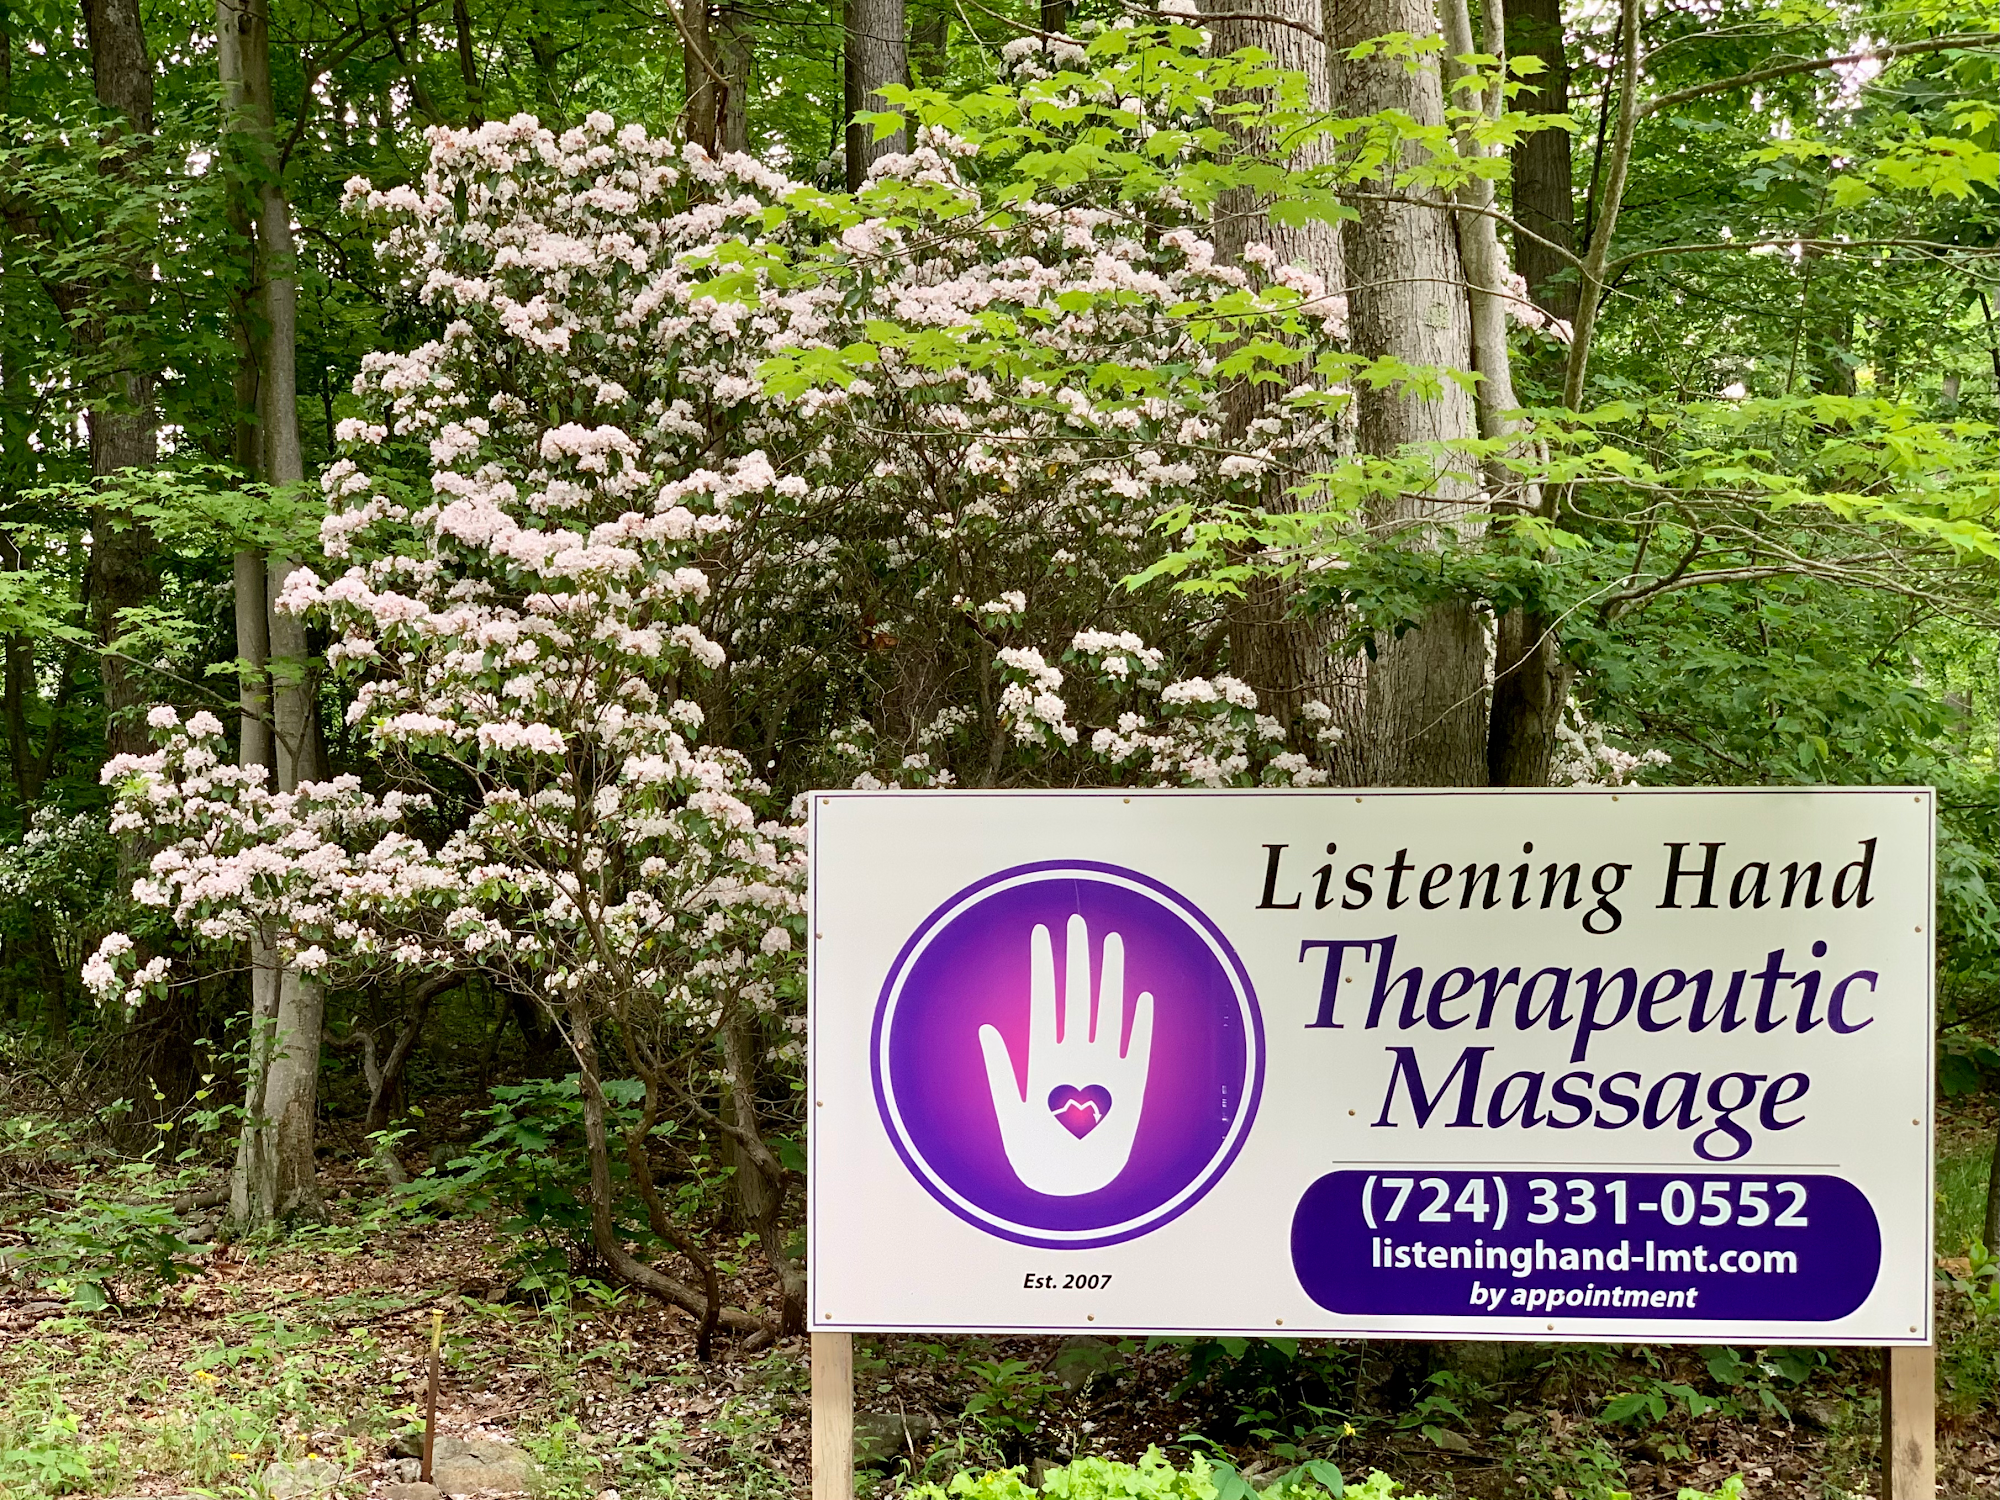 Listening Hand Therapeutic Massage 3339 PA-130, Acme Pennsylvania 15610